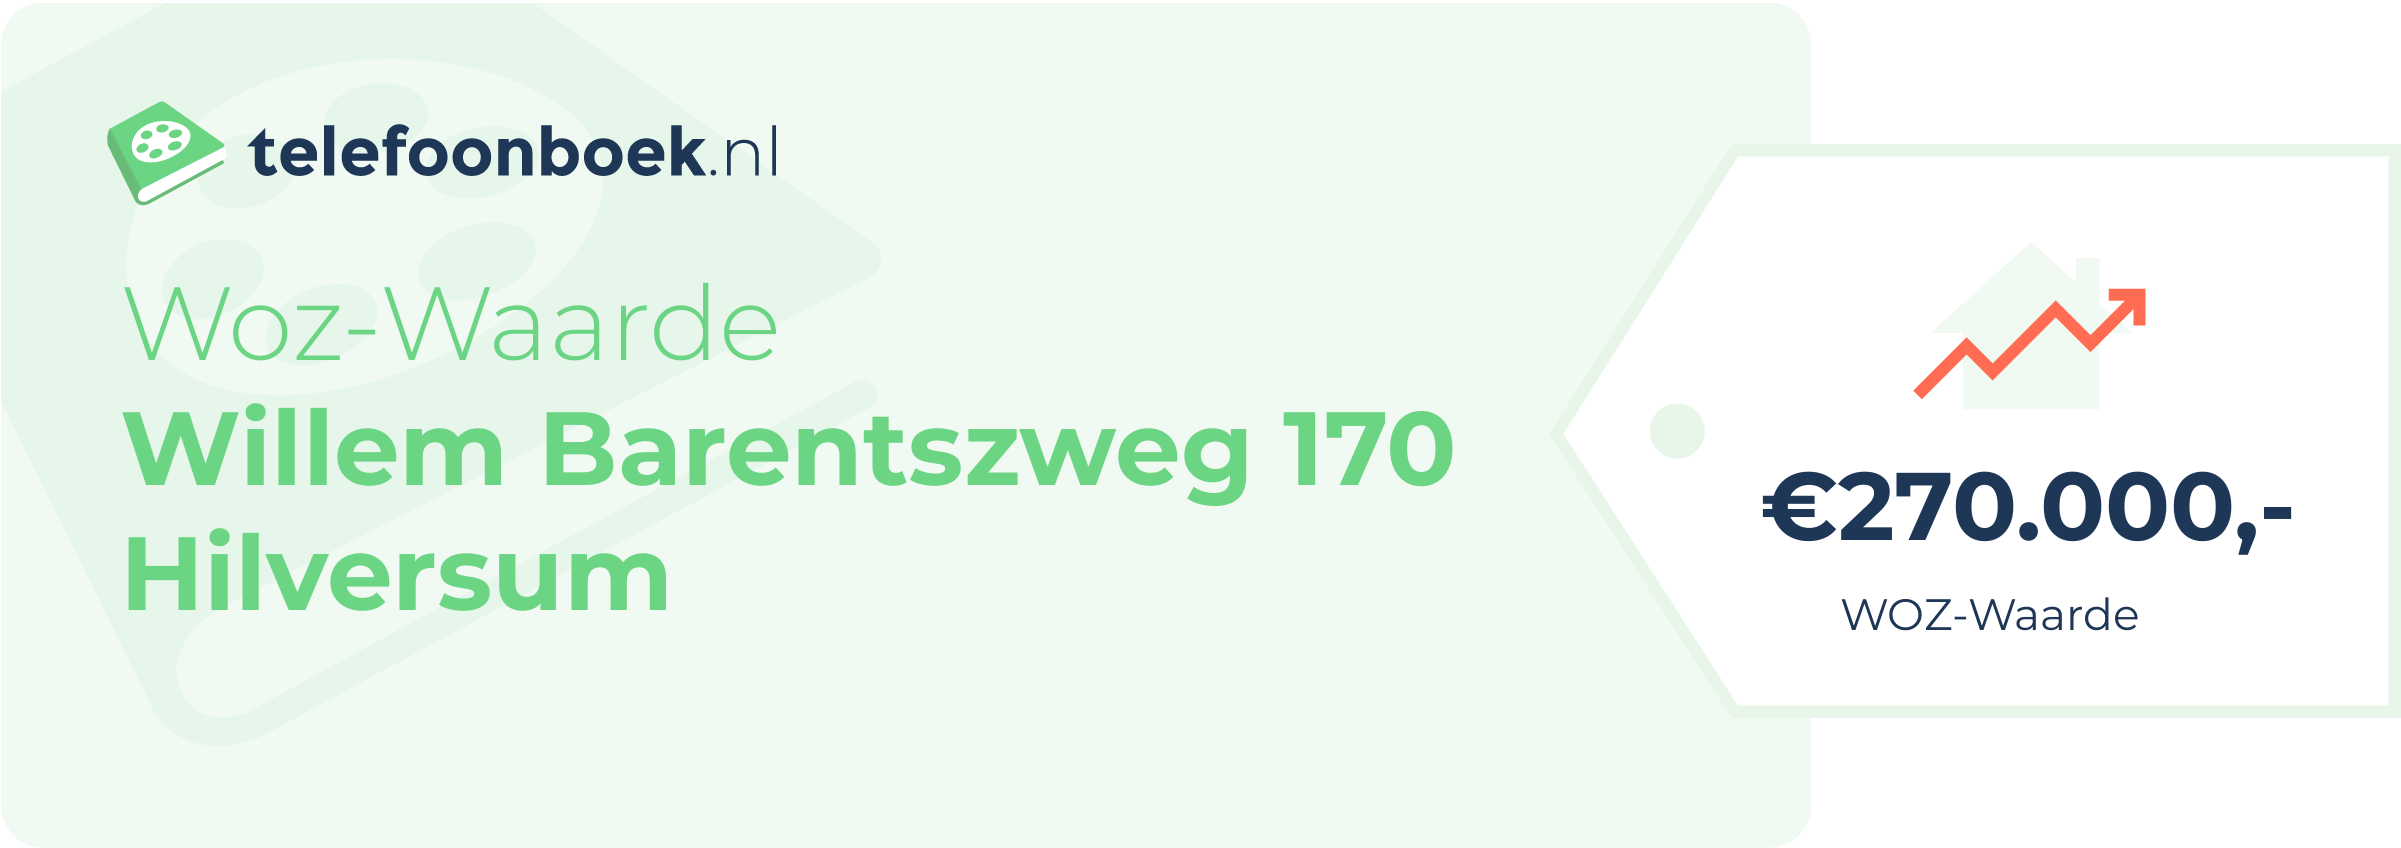 WOZ-waarde Willem Barentszweg 170 Hilversum